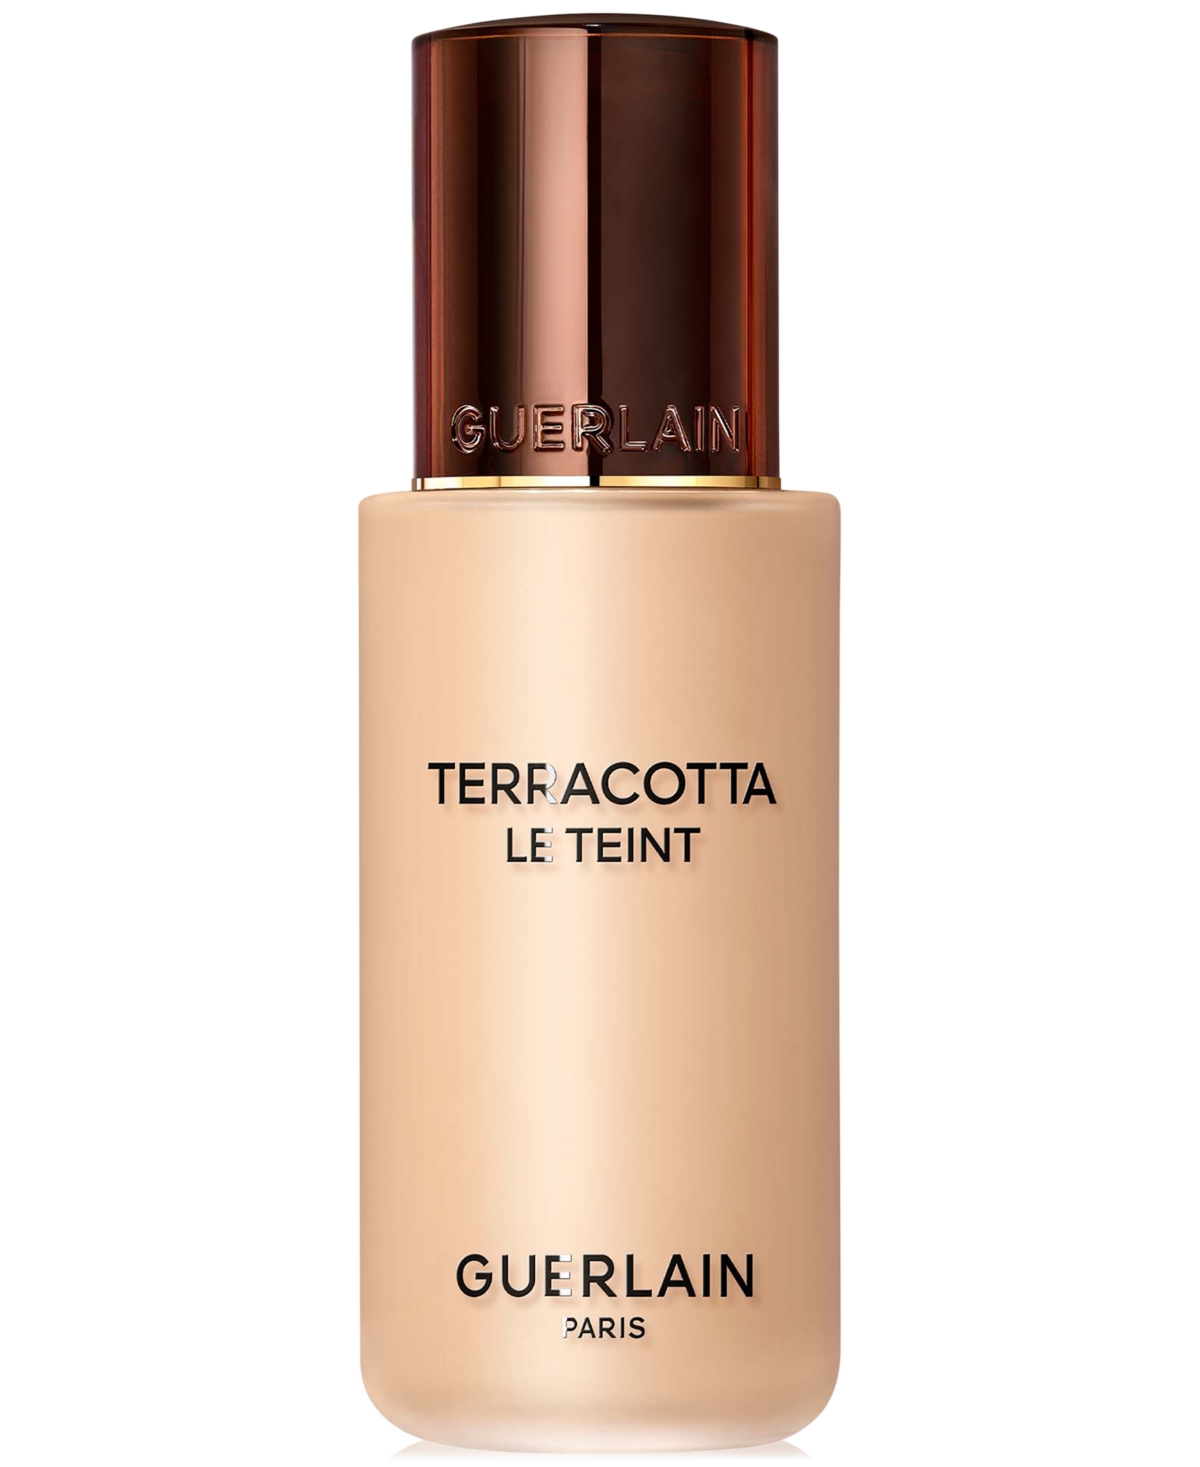 Guerlain Terracotta Le Teint Healthy Glow Foundation In W Light Skin With Golden Undertones